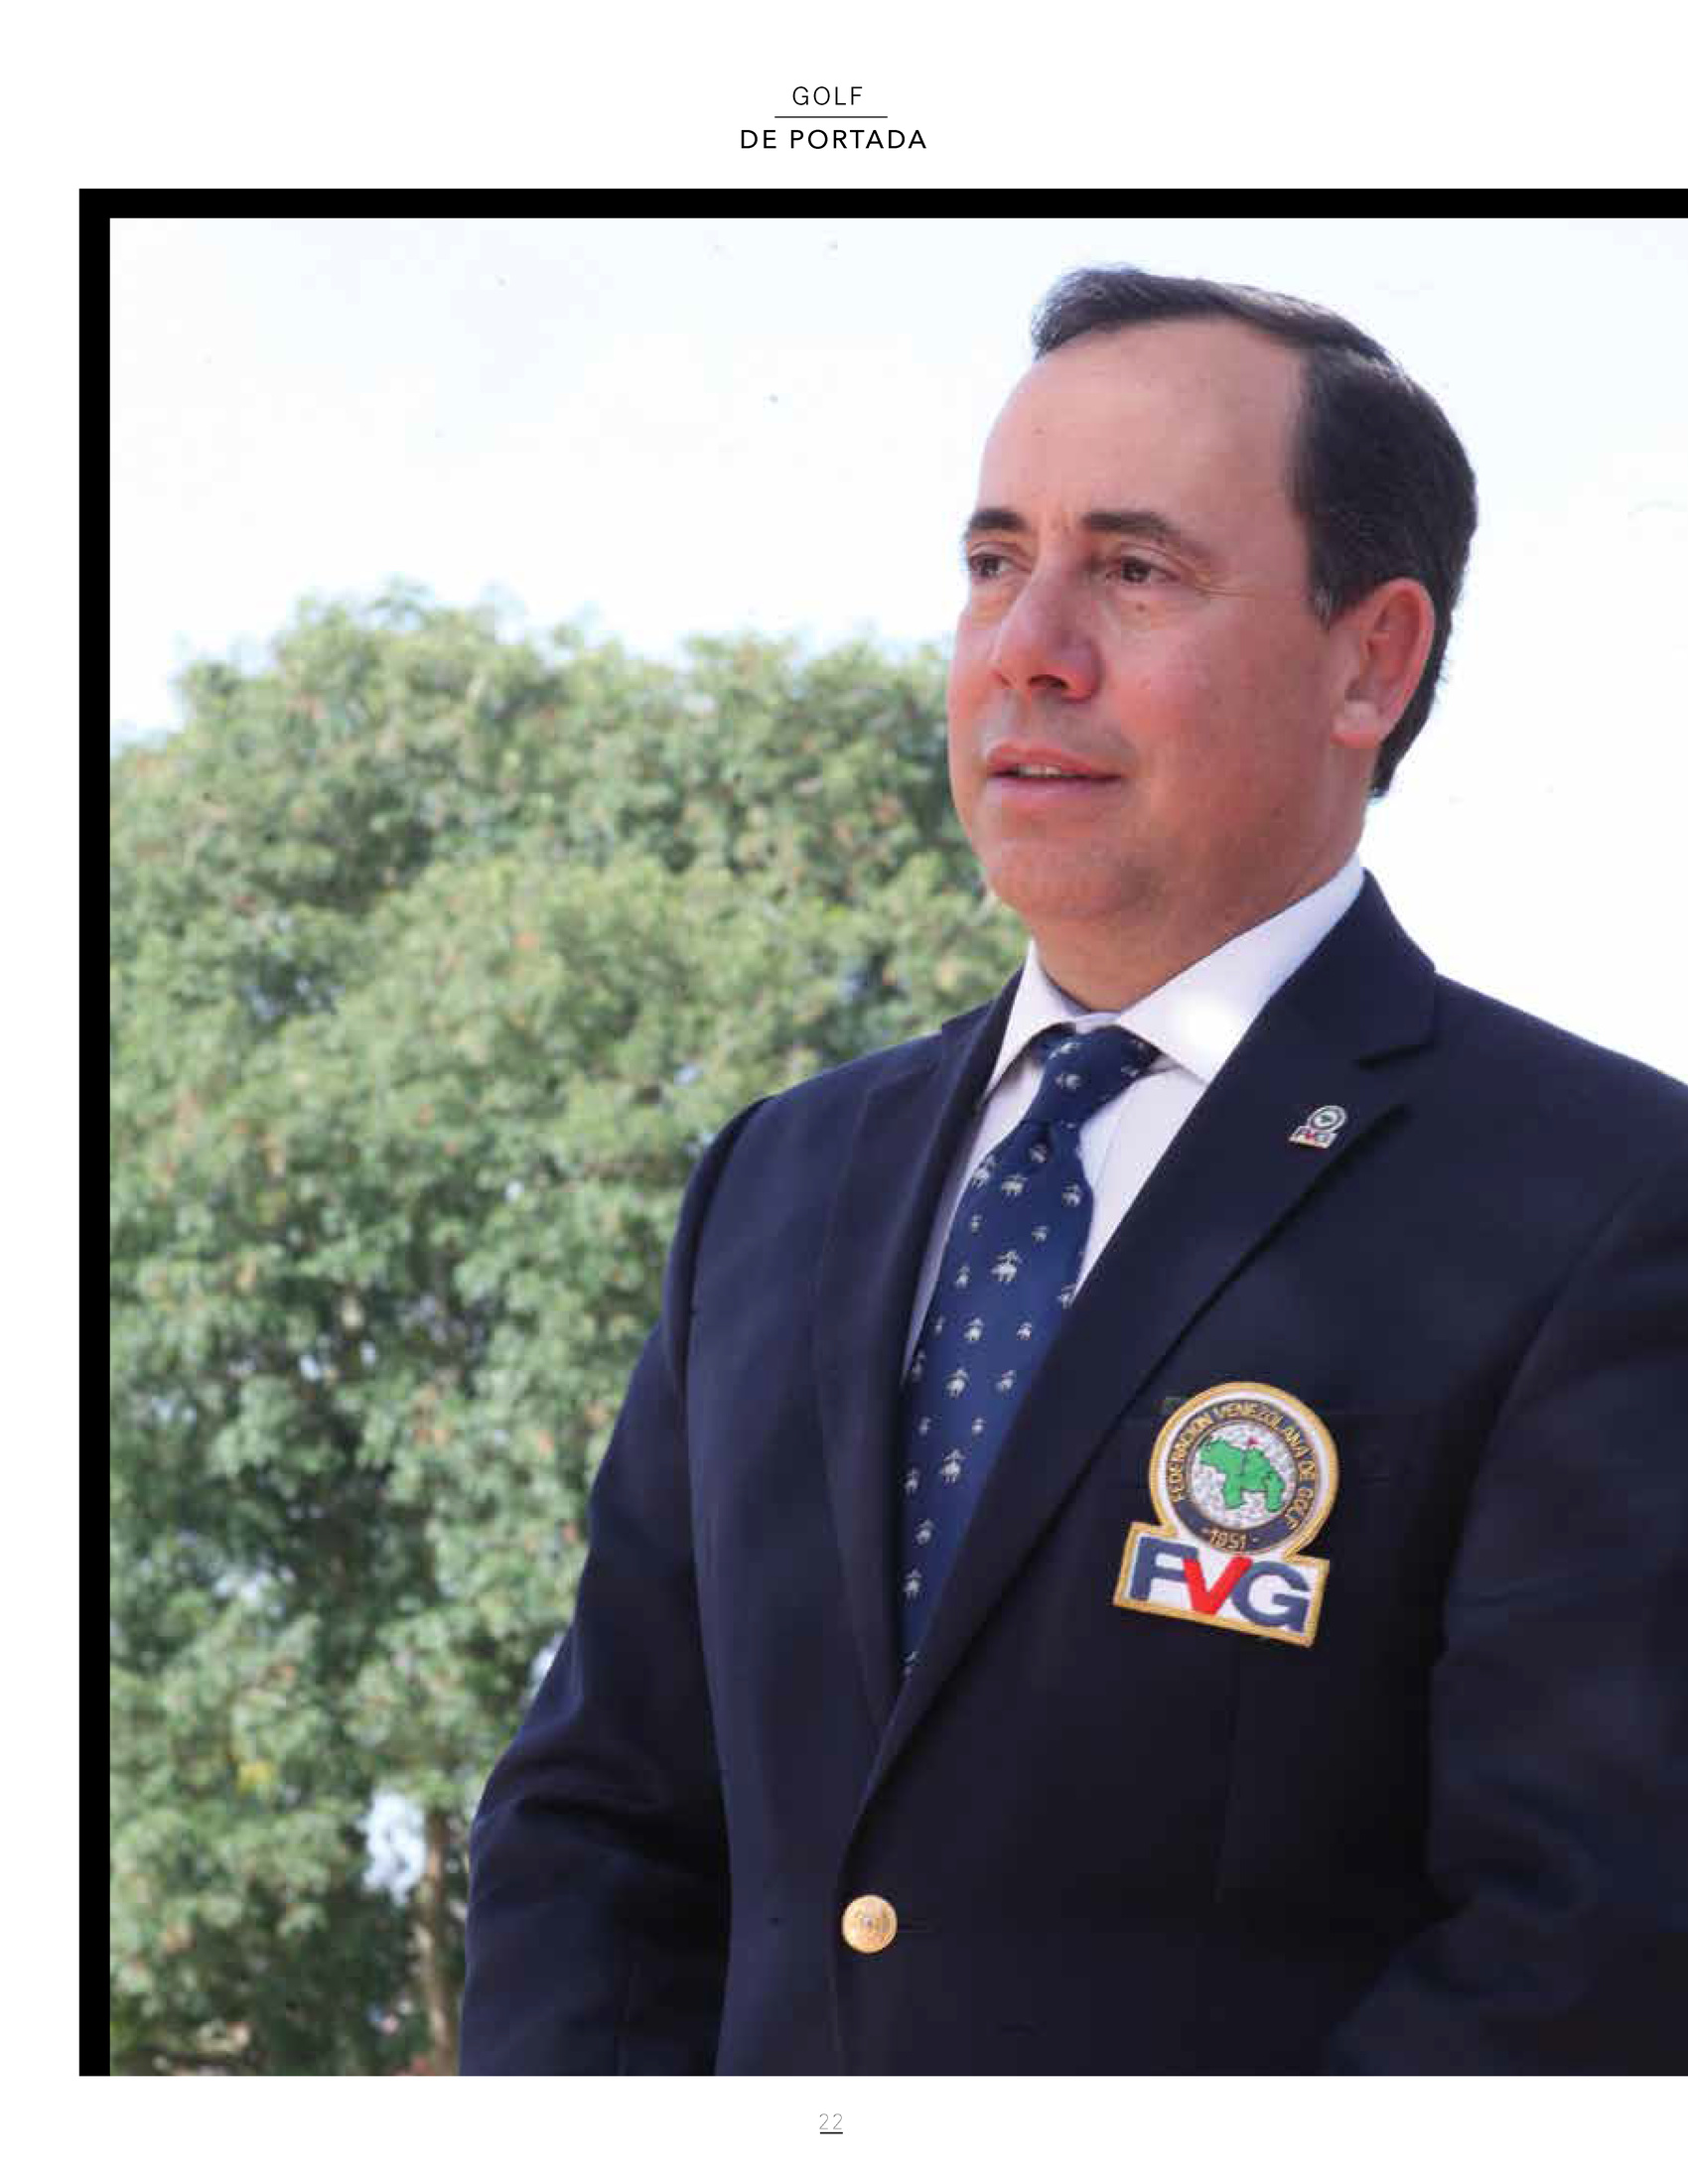 27-REV Rafael Barrios masificacion golf nacional